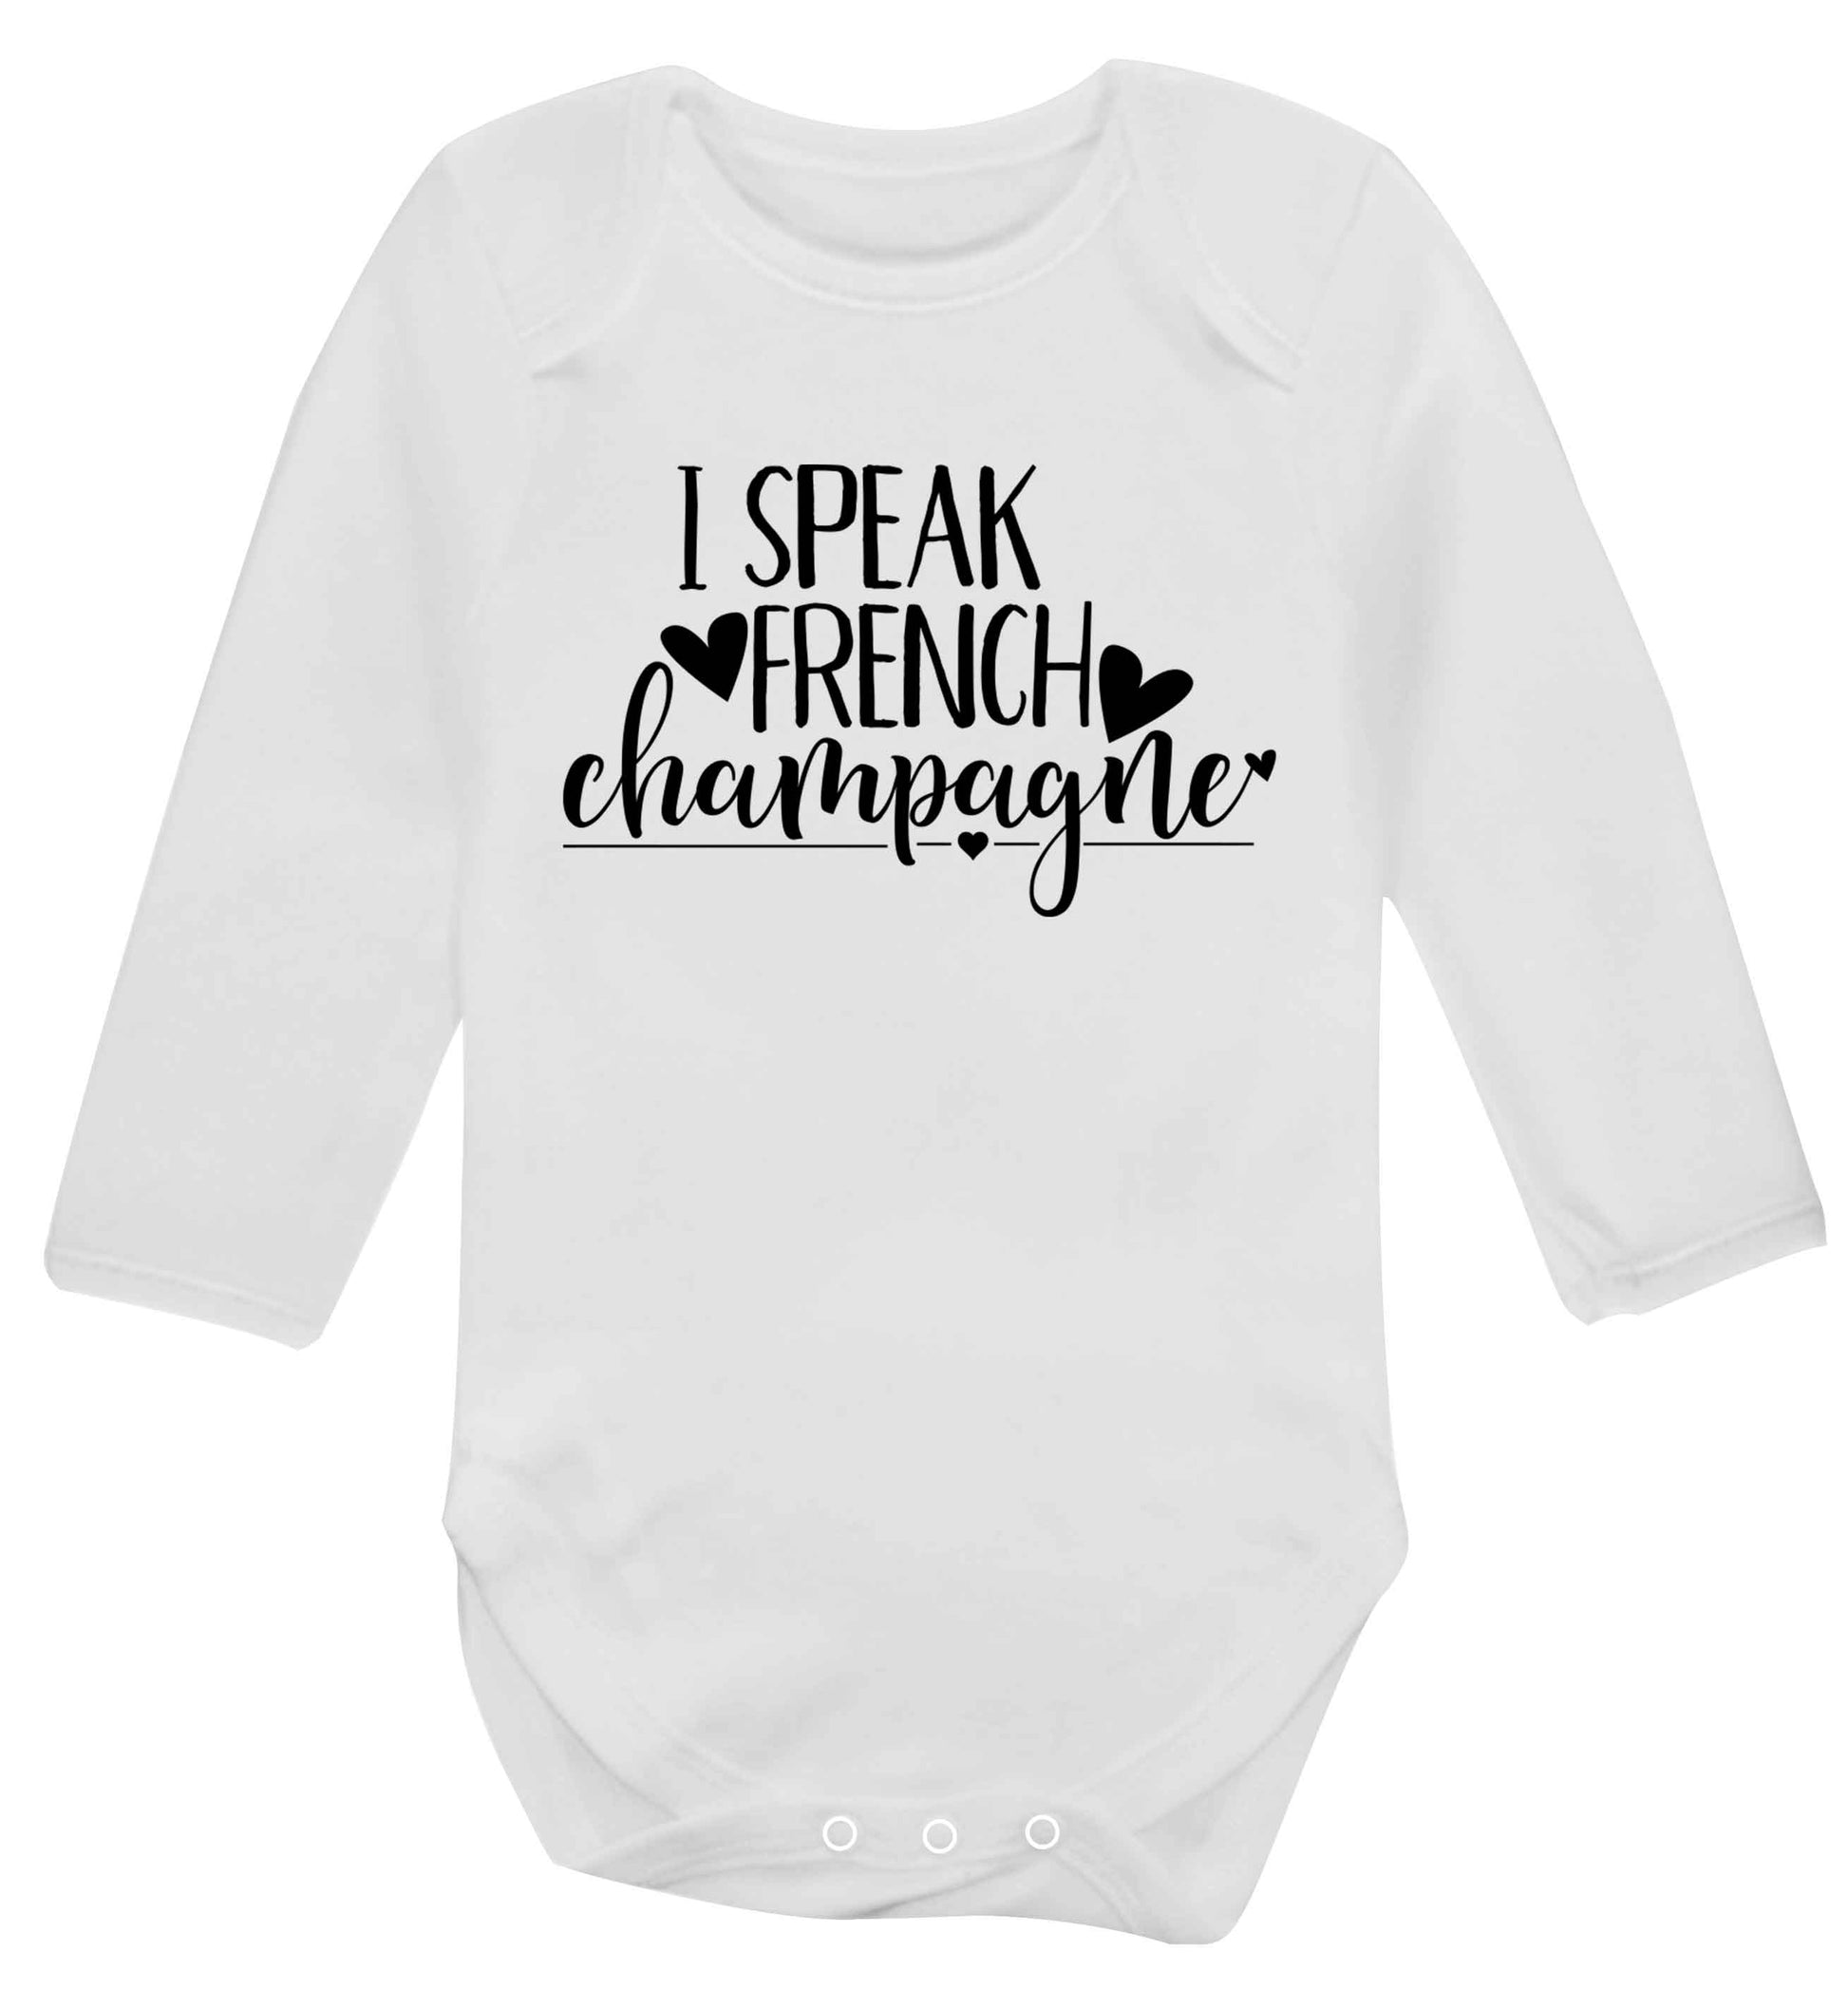 I speak french champagne Baby Vest long sleeved white 6-12 months